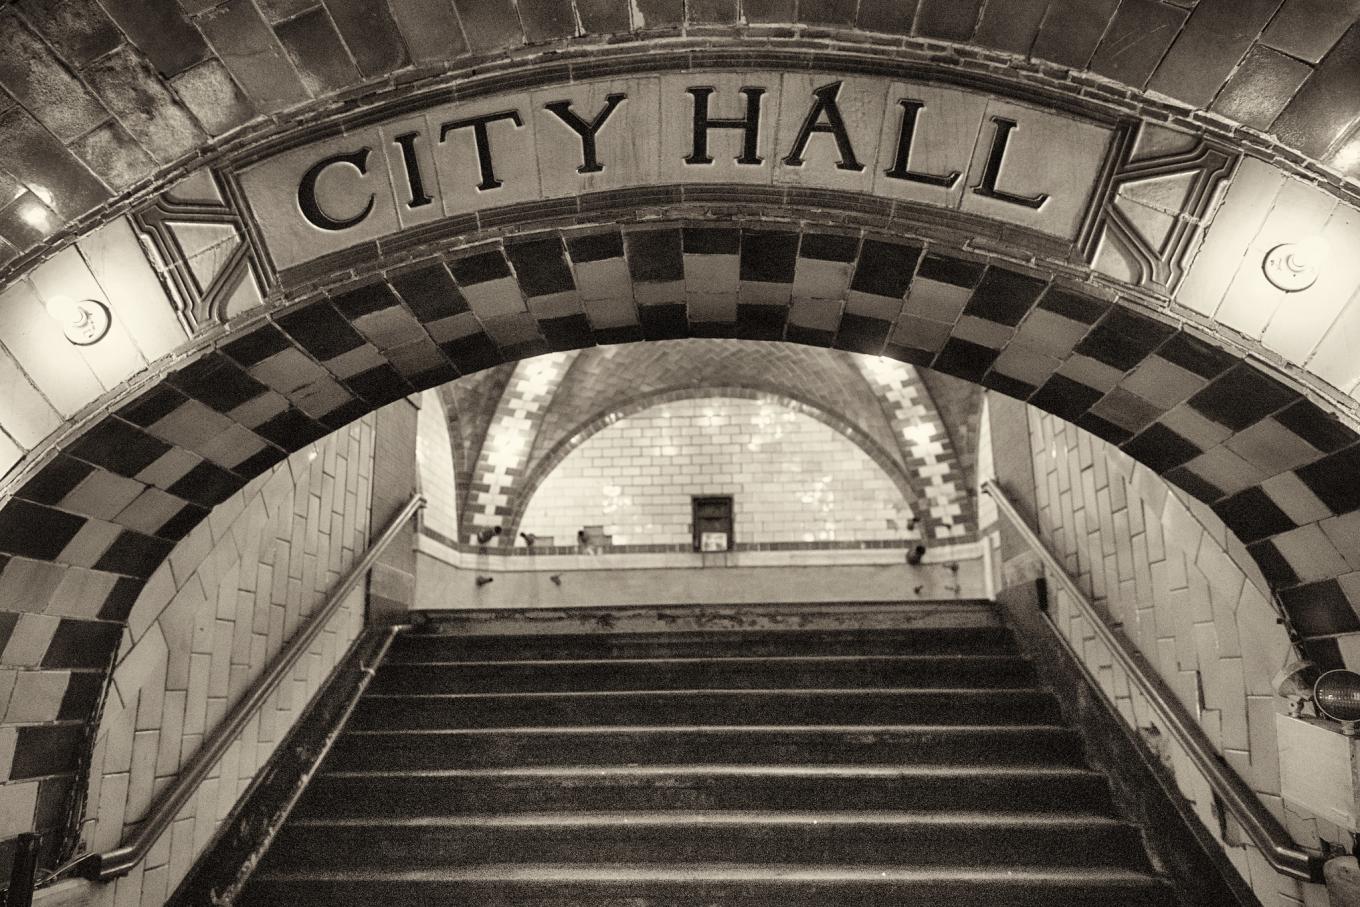 Photo of New York City Hall Subway Station